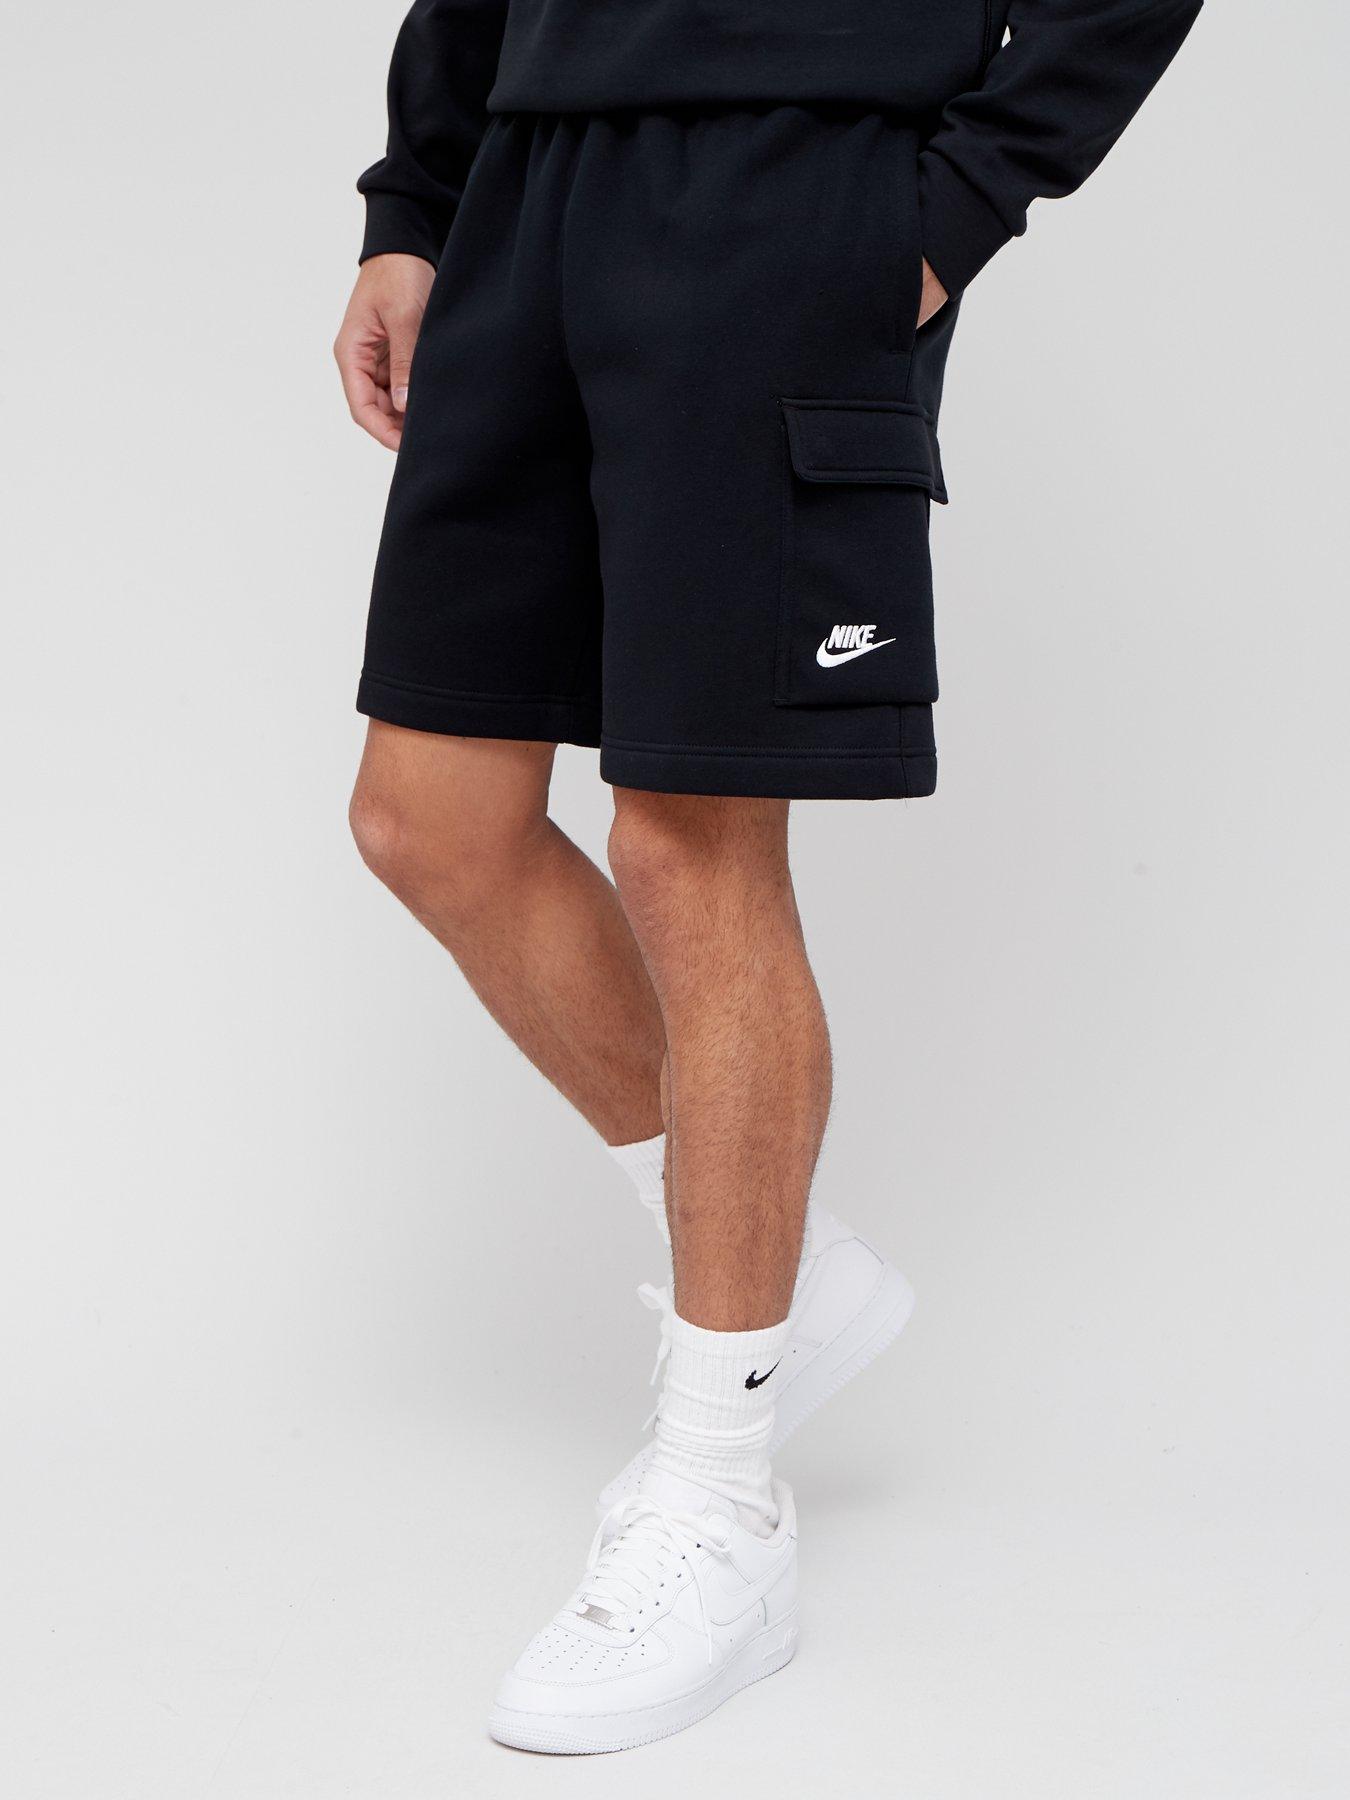 Shorts | Mens sports clothing | Sports & leisure | Nike | www.very.co.uk